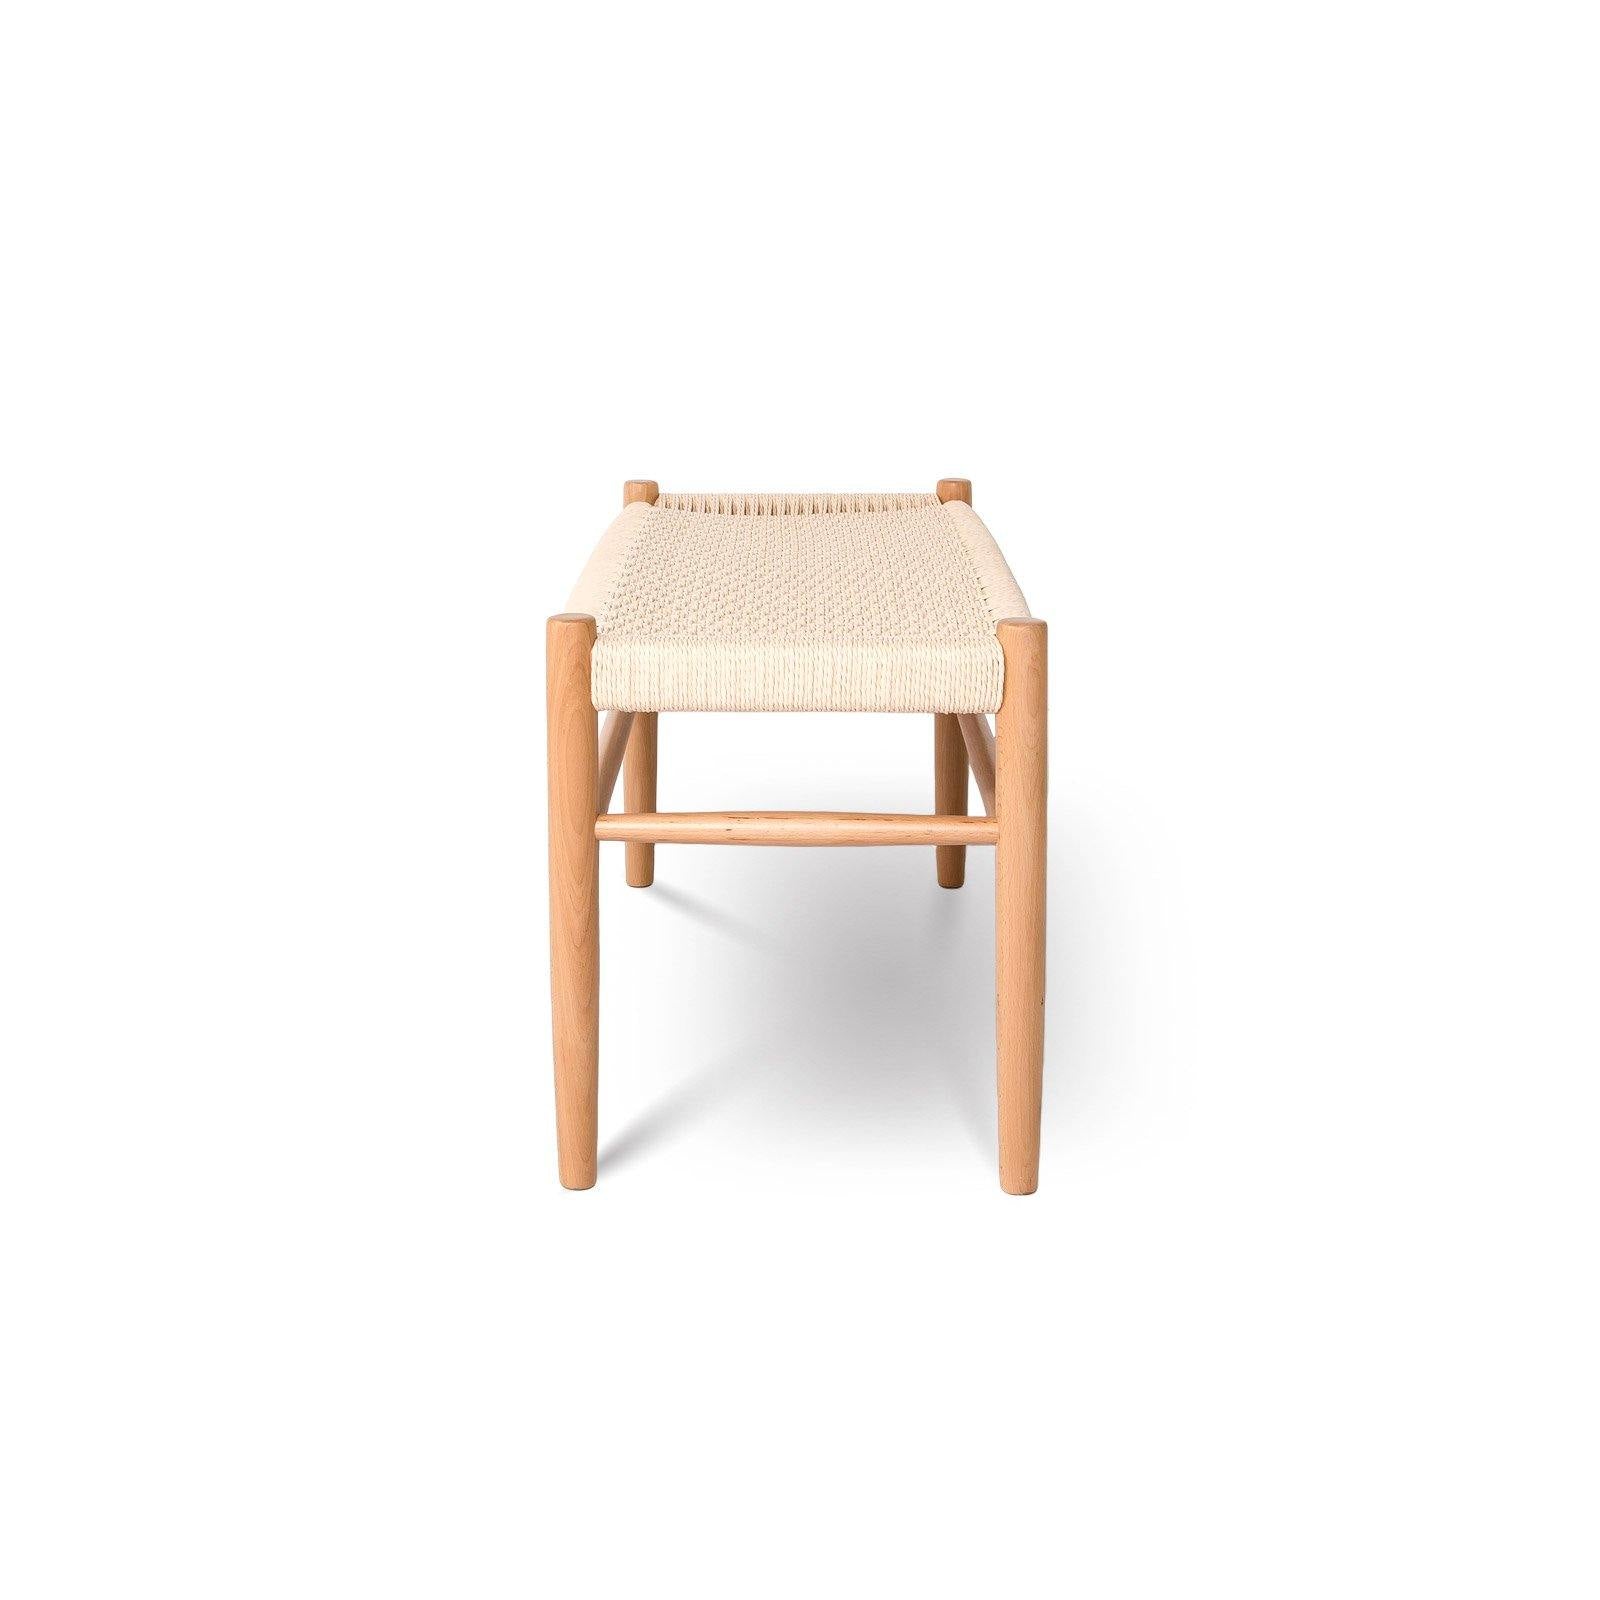 Corsica Bench – Beech Wood - Reimagine Designs - bench, new